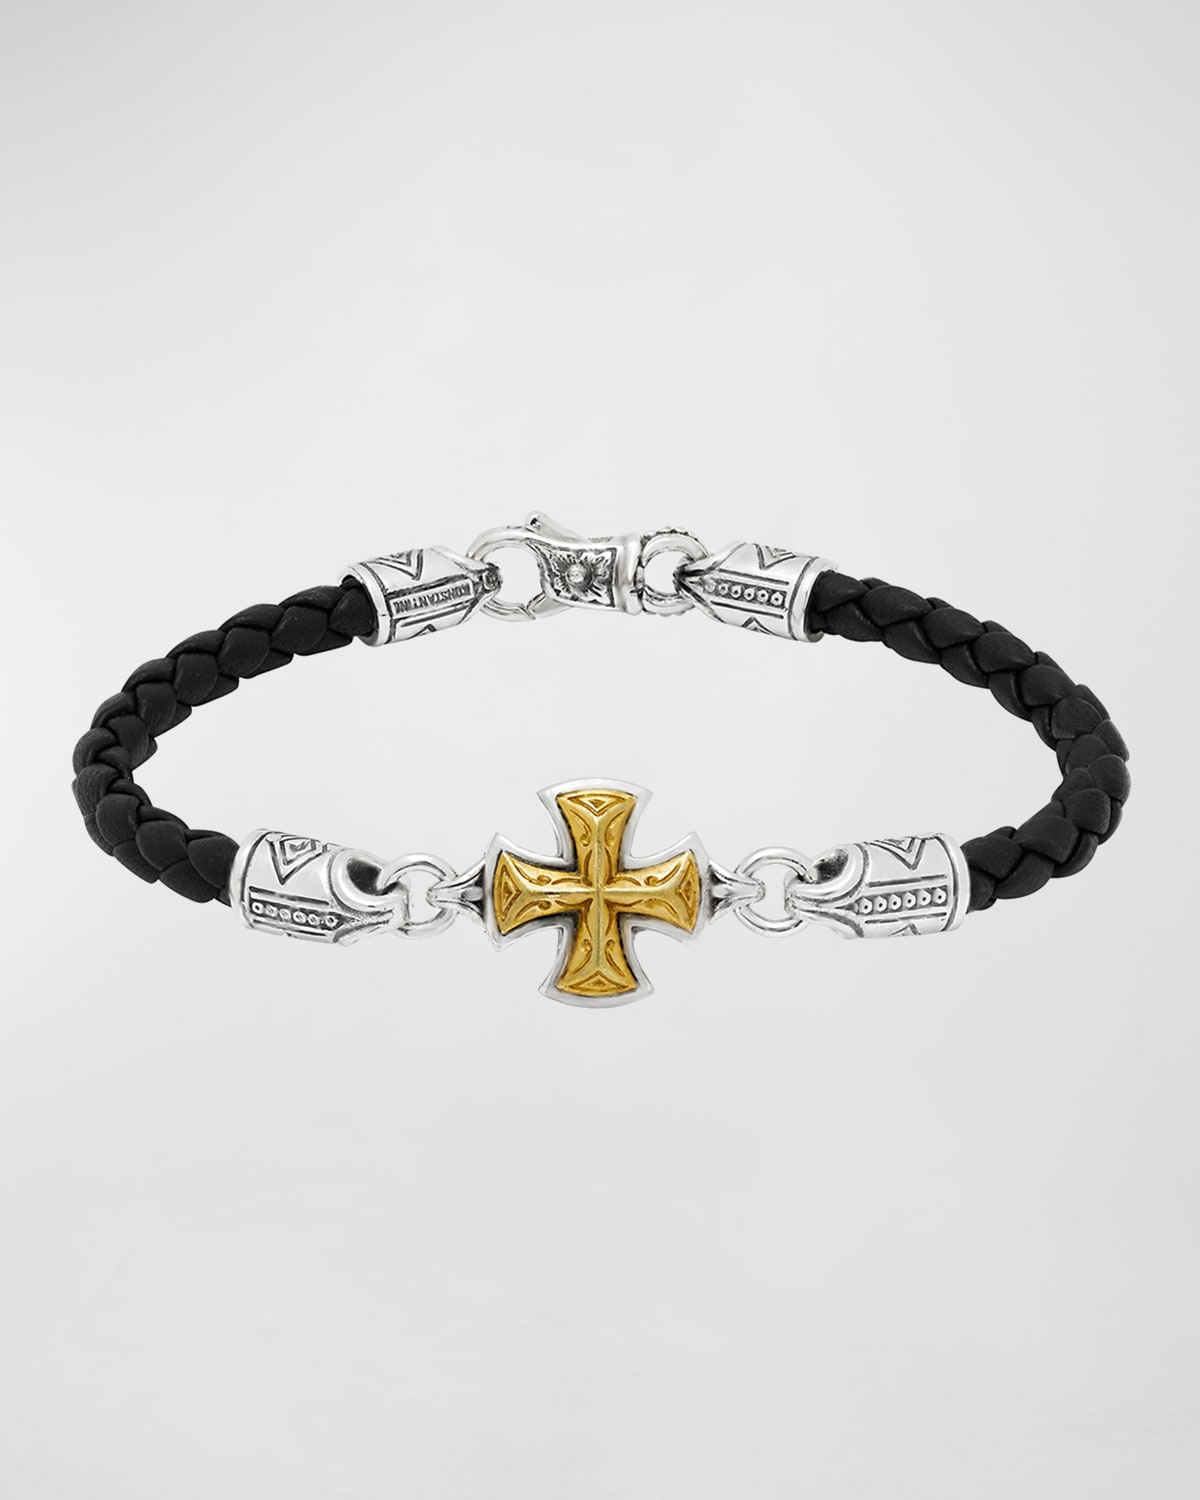 Konstantino Men's Perseus Leather Bracelet with Silver/Bronze Cross, Size M